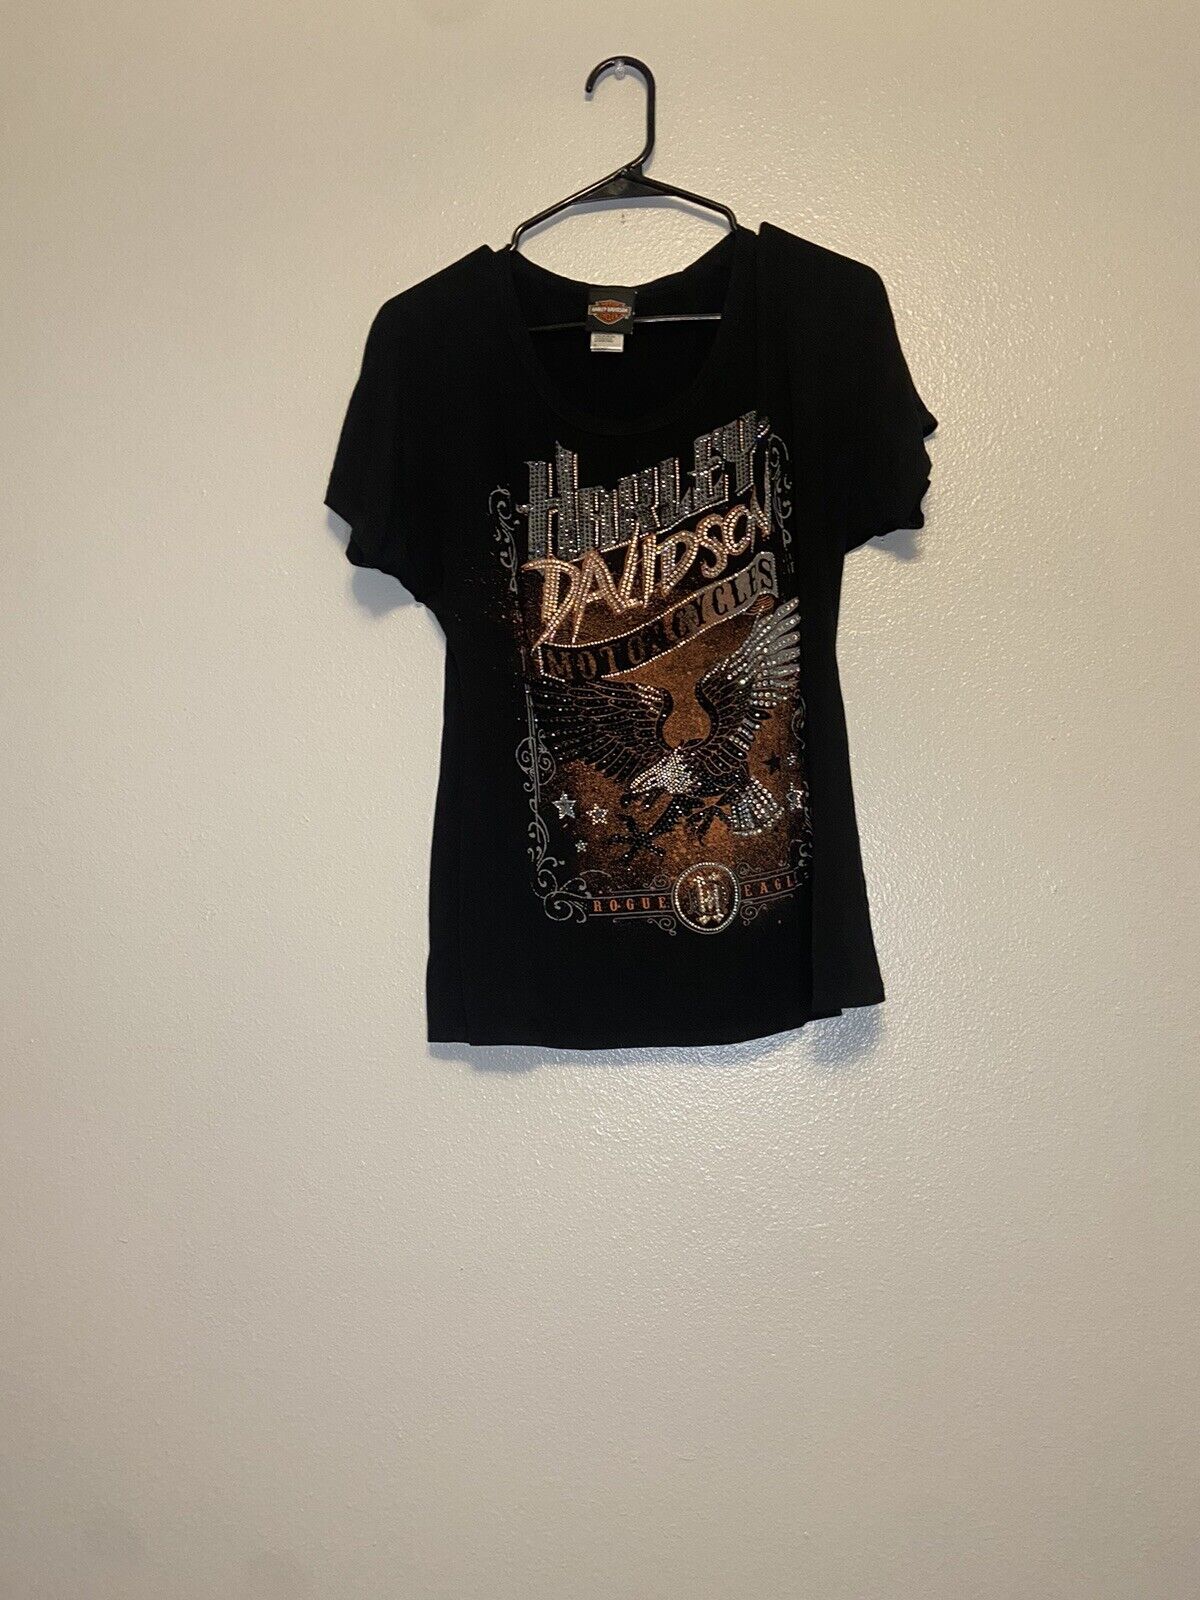 Women’s Harley Davidson T-shirt (Small)